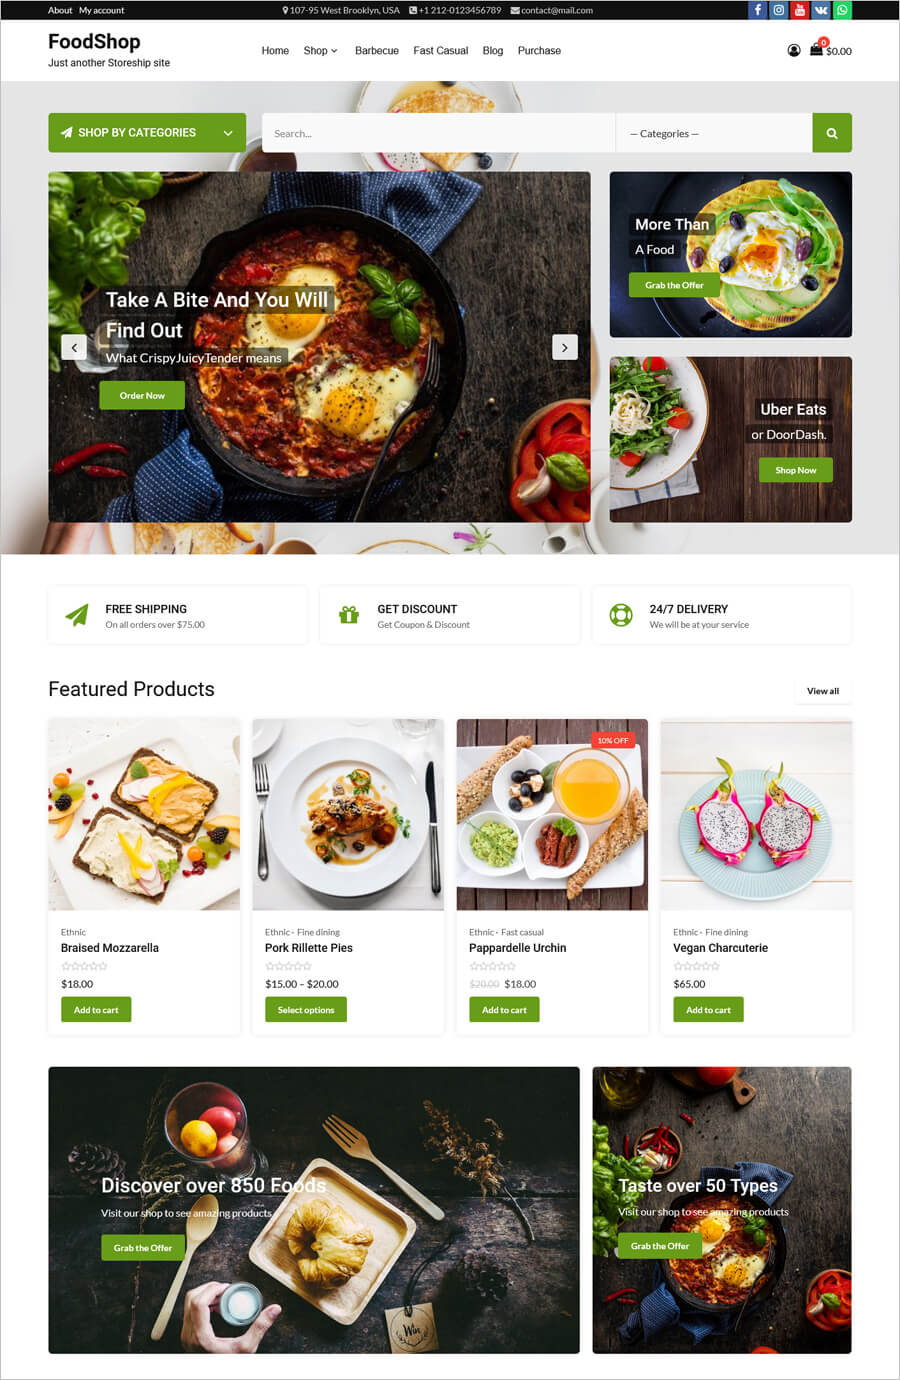 FoodShop - Free eCommerce Website Template